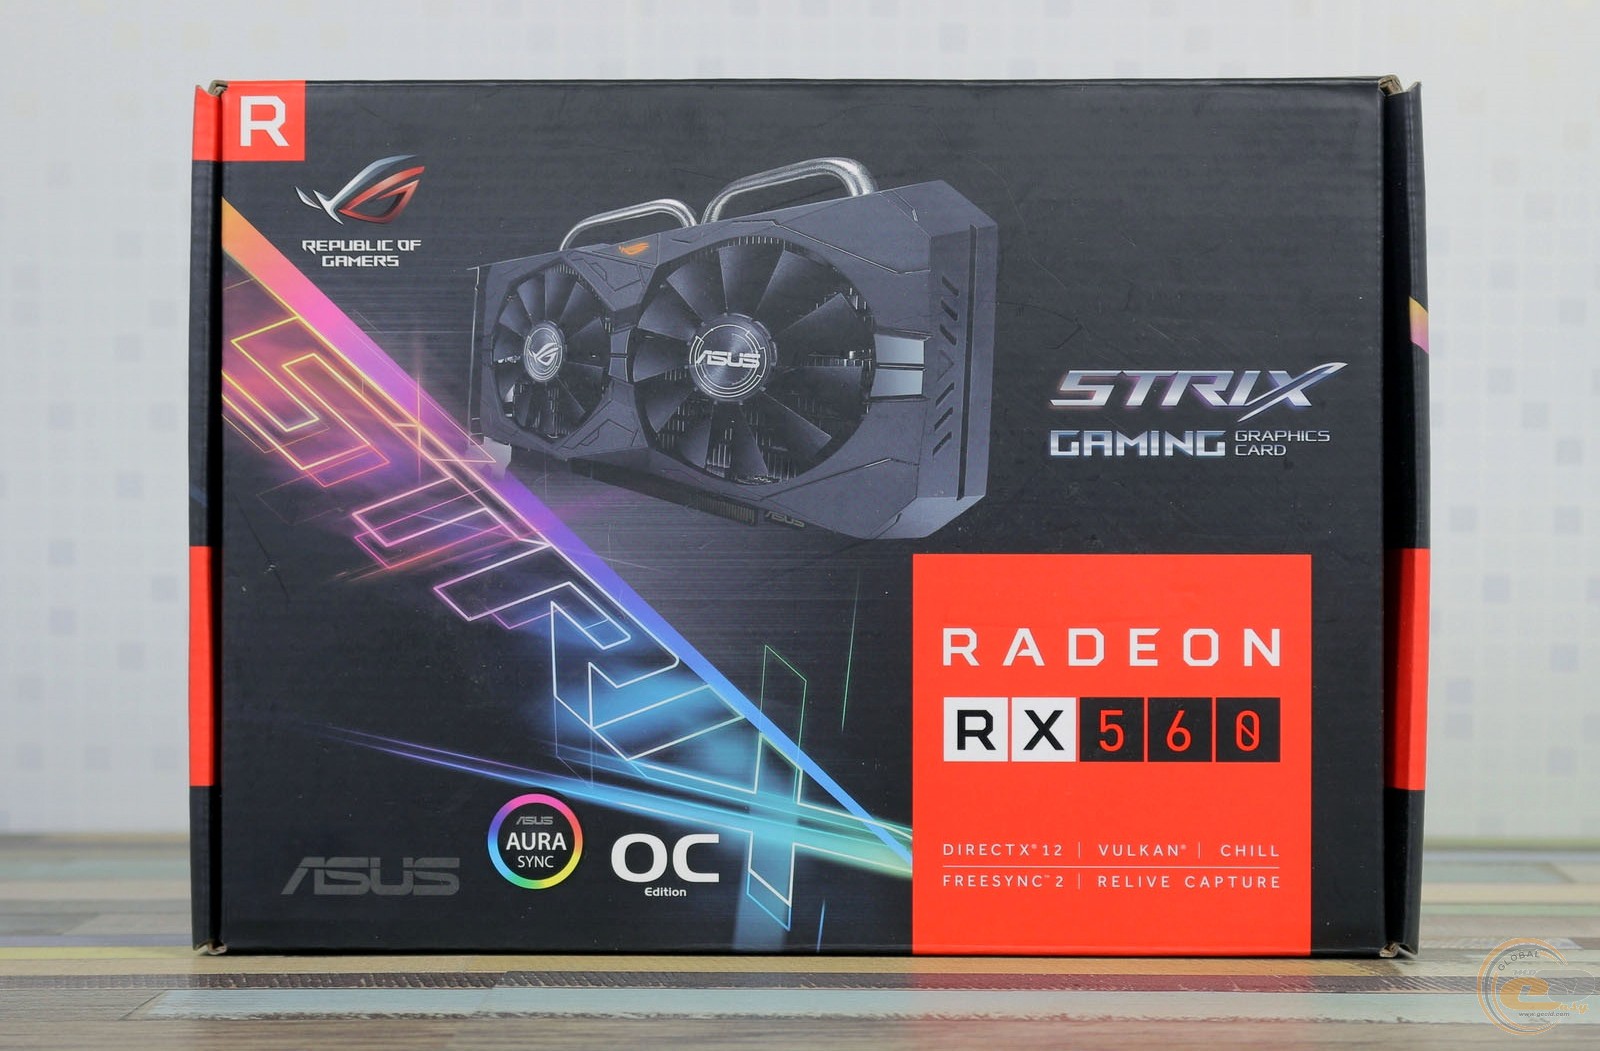 Radeon rx 560 strix gaming